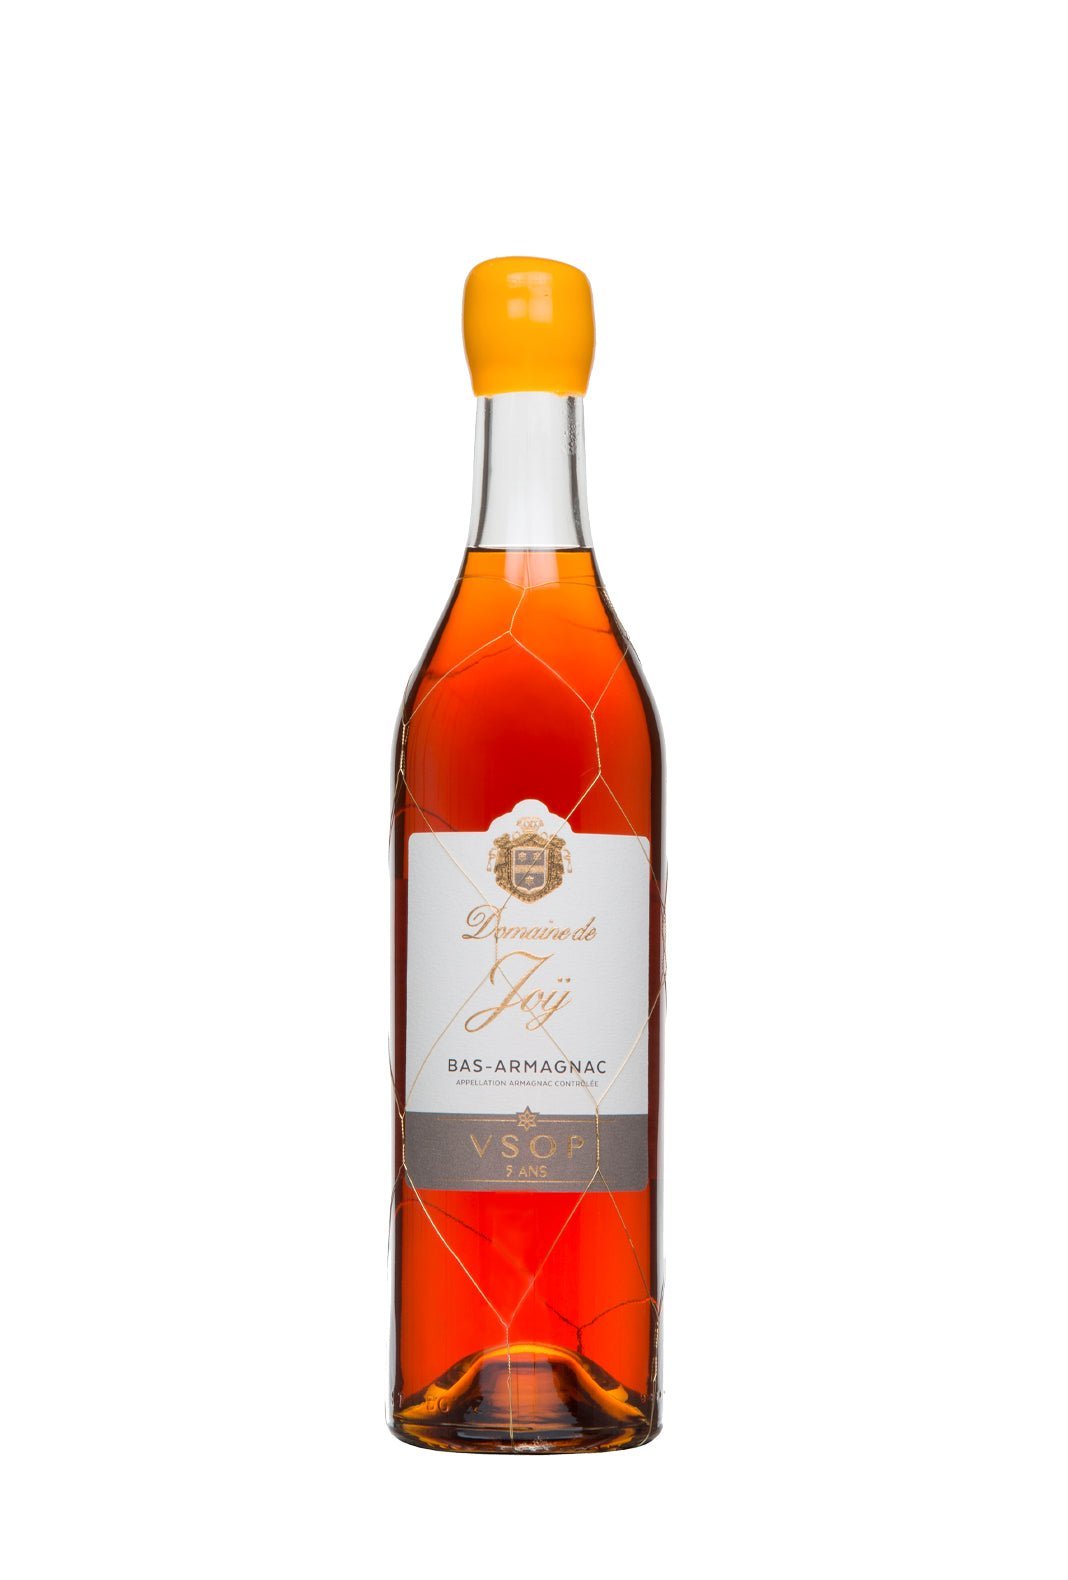 Domaine de Joy Bas Armagnac VSOP 5 years 40.5% 500ml | Brandy | Shop online at Spirits of France